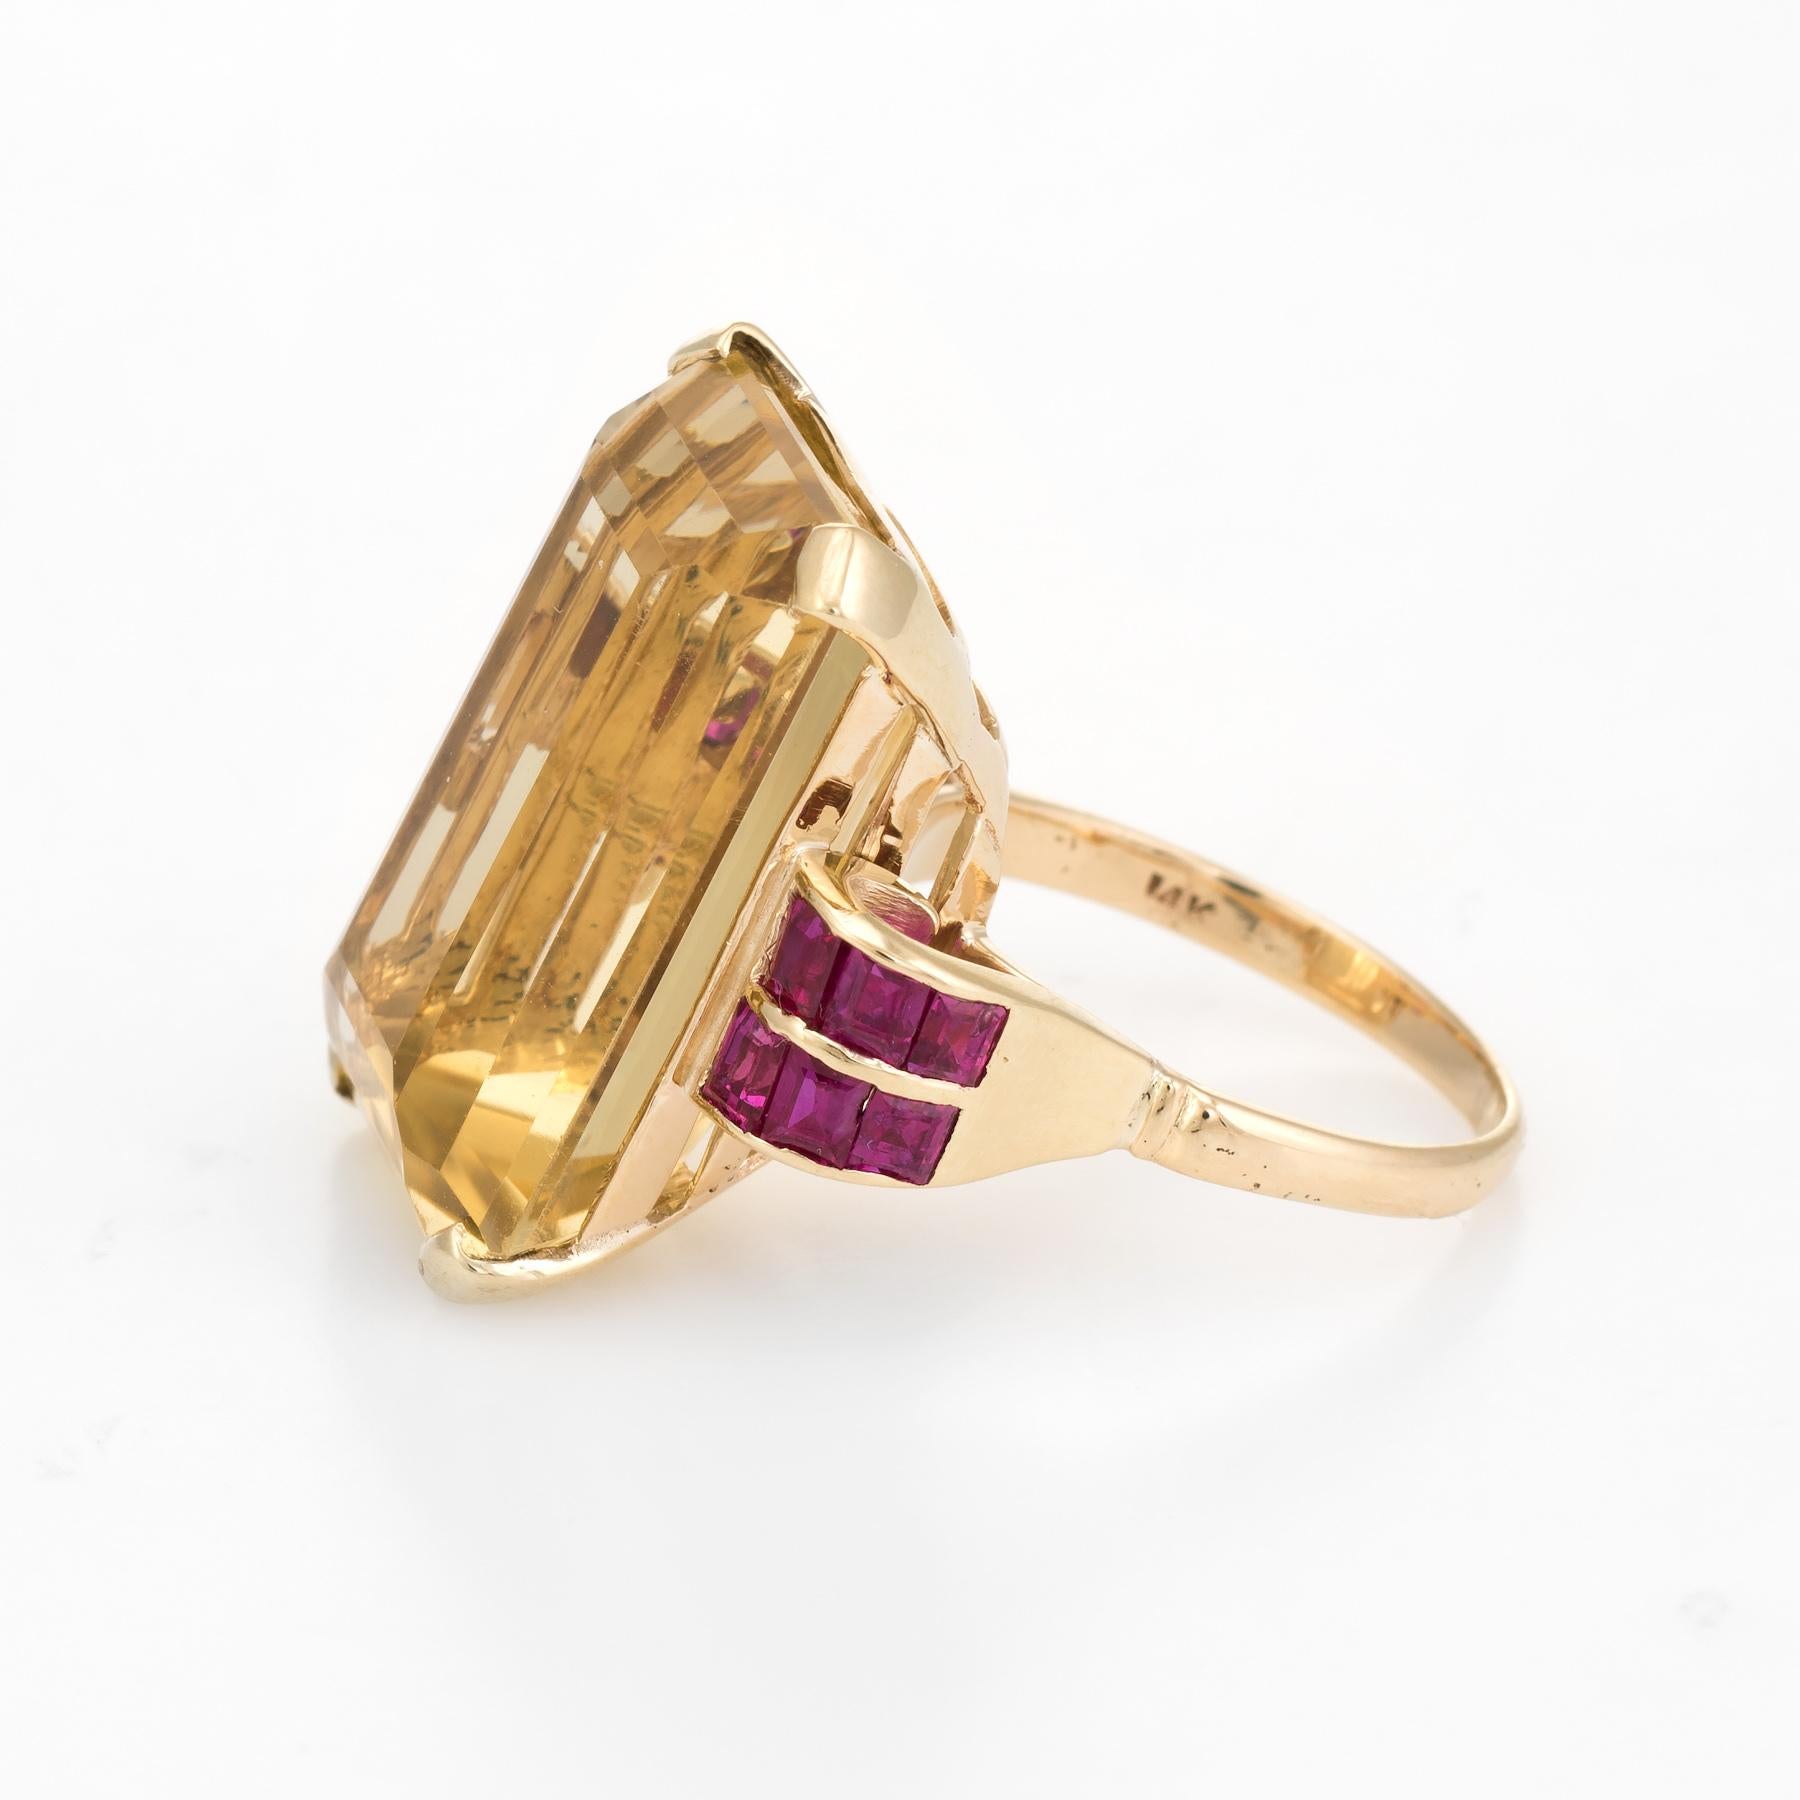 Retro Citrine Ruby Cocktail Ring Vintage 14 Karat Gold Large Statement Ring Jewelry